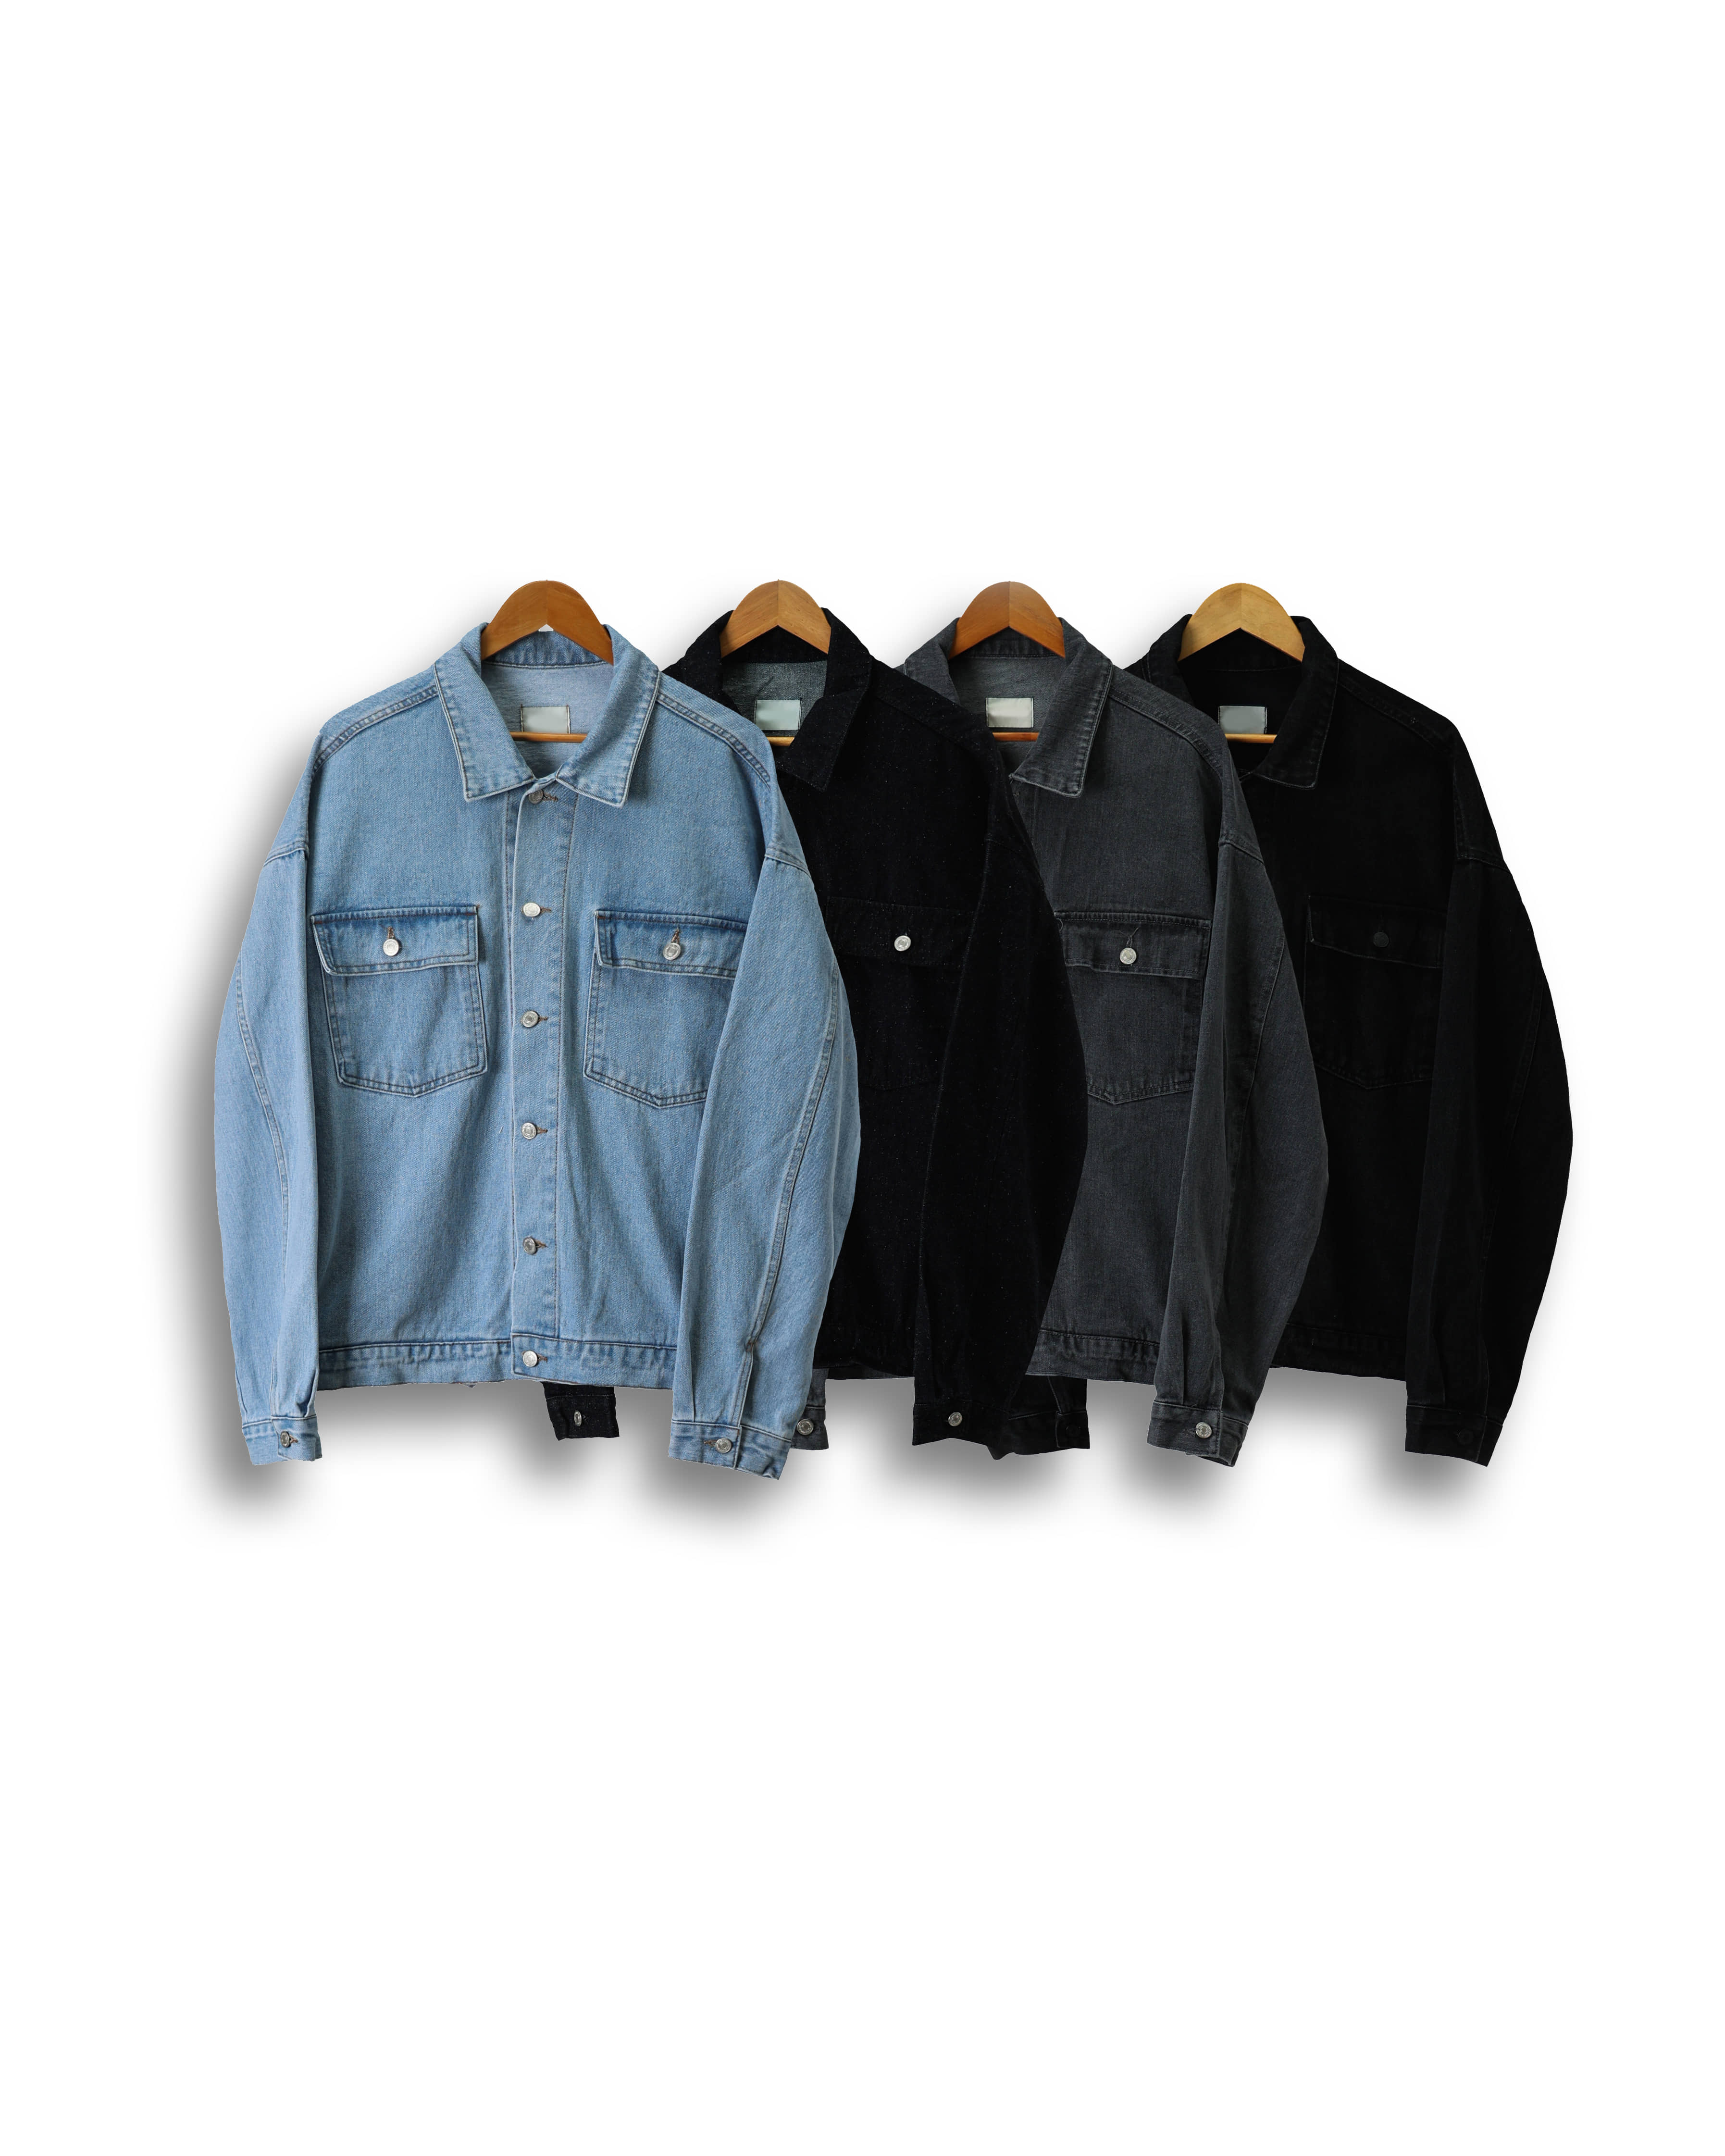 FREAKS Oversized Casual Denim Jacket (Black/Raw/Gray/Light Blue)